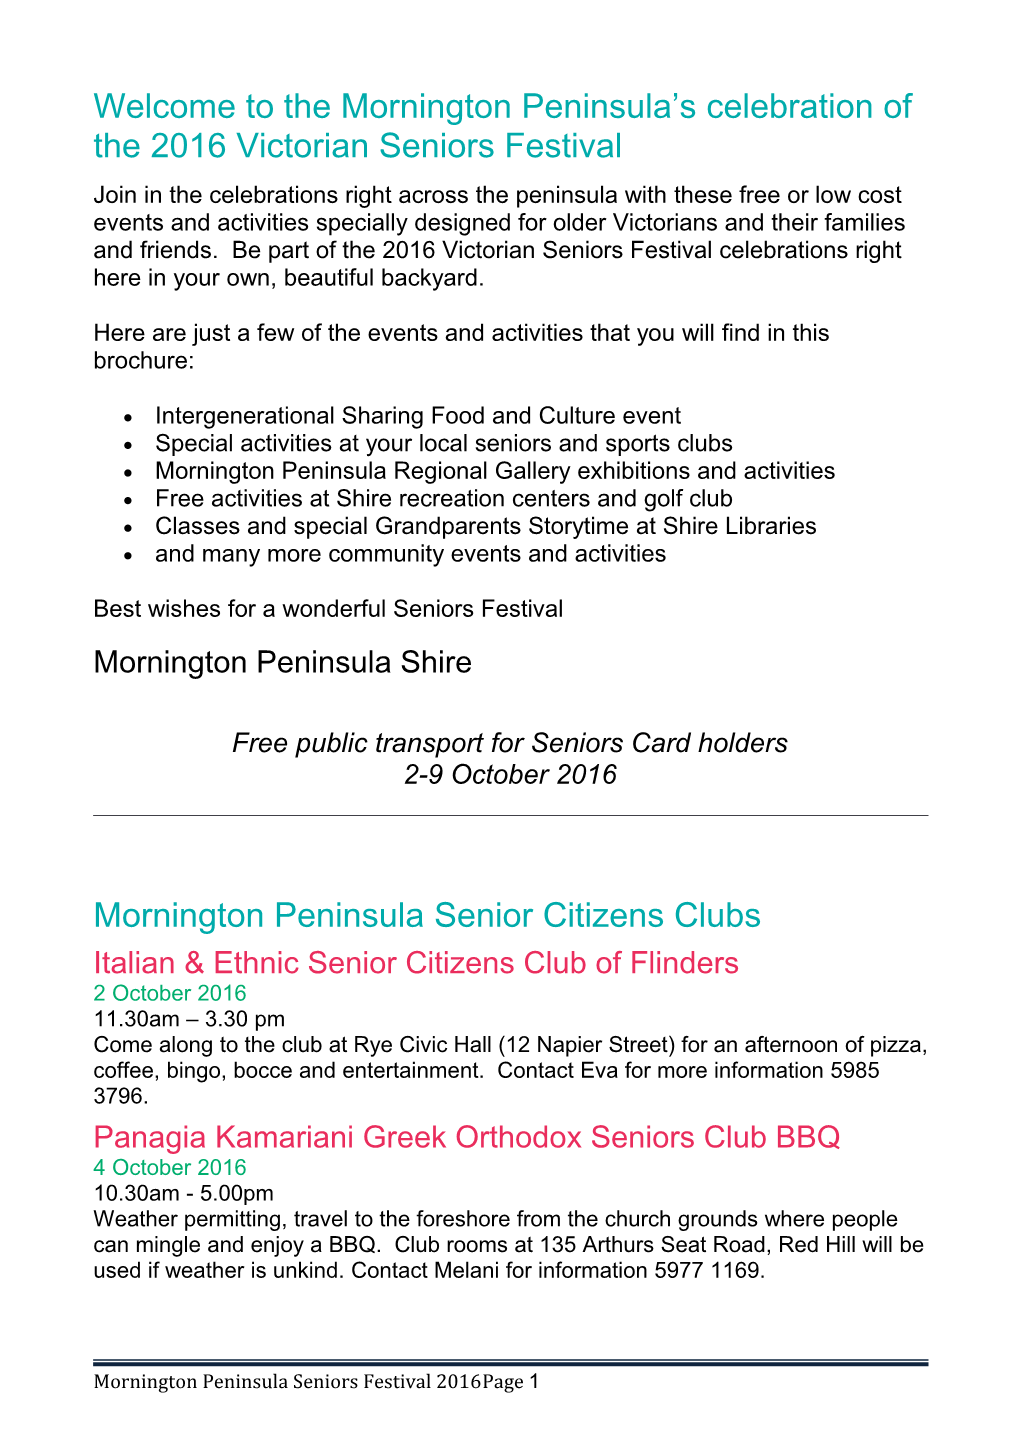 Welcome to the Mornington Peninsula S Celebration of the 2016 Victorian Seniors Festival